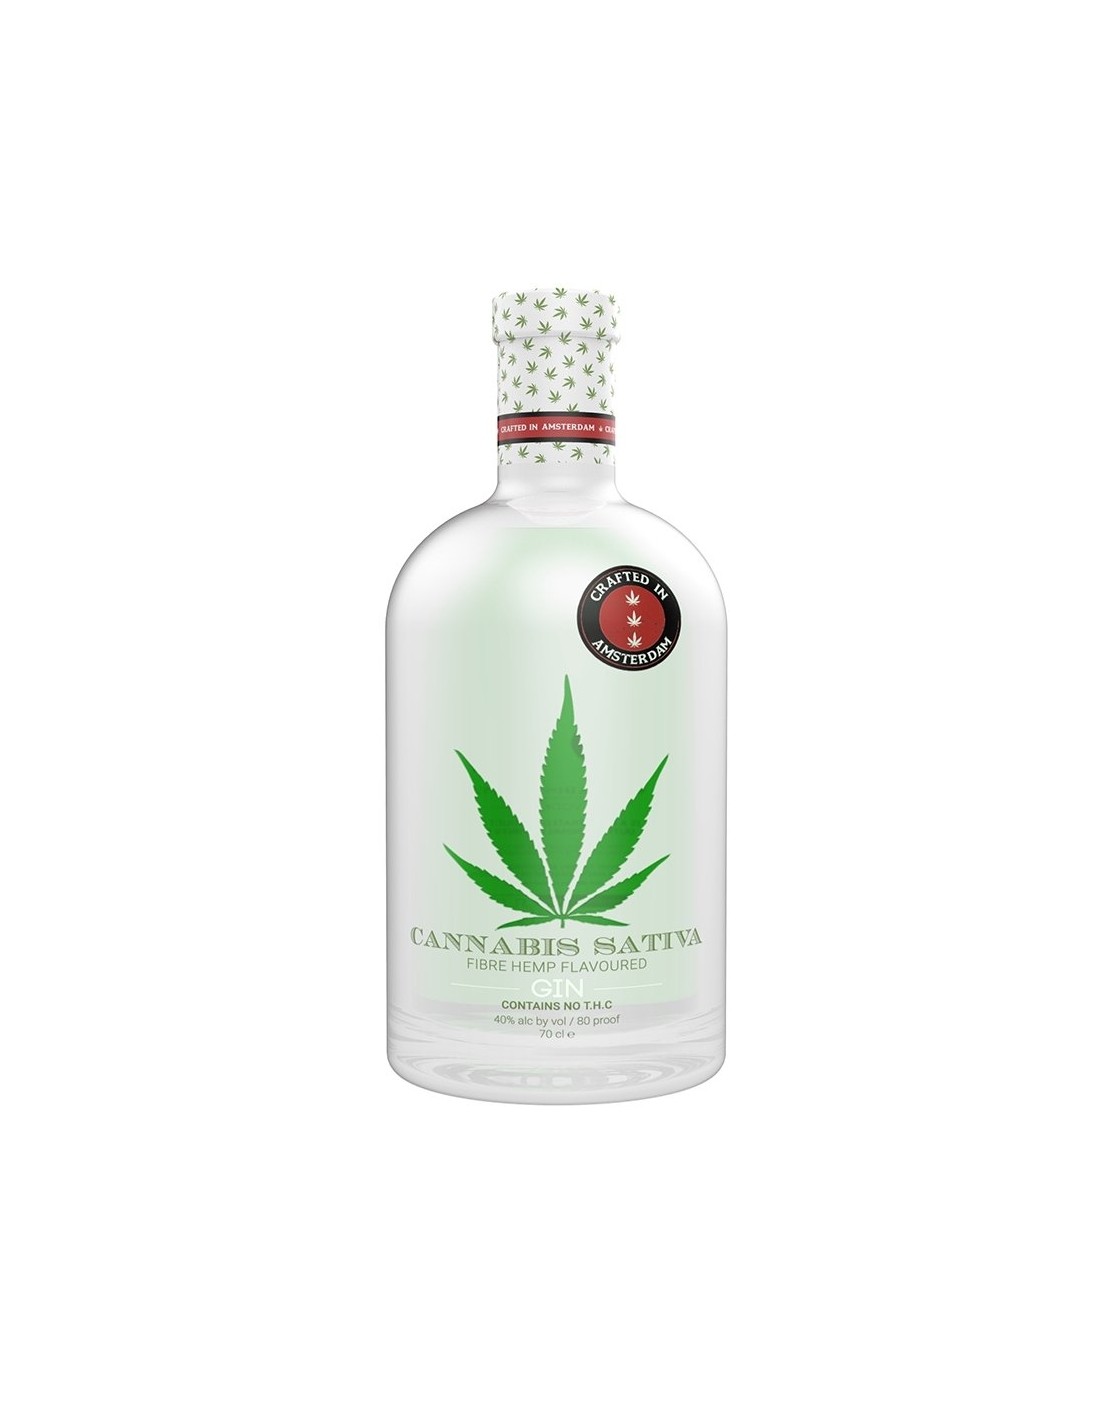 Gin Cannabis Sativa 40% alc., 0.7L, Olanda alcooldiscount.ro